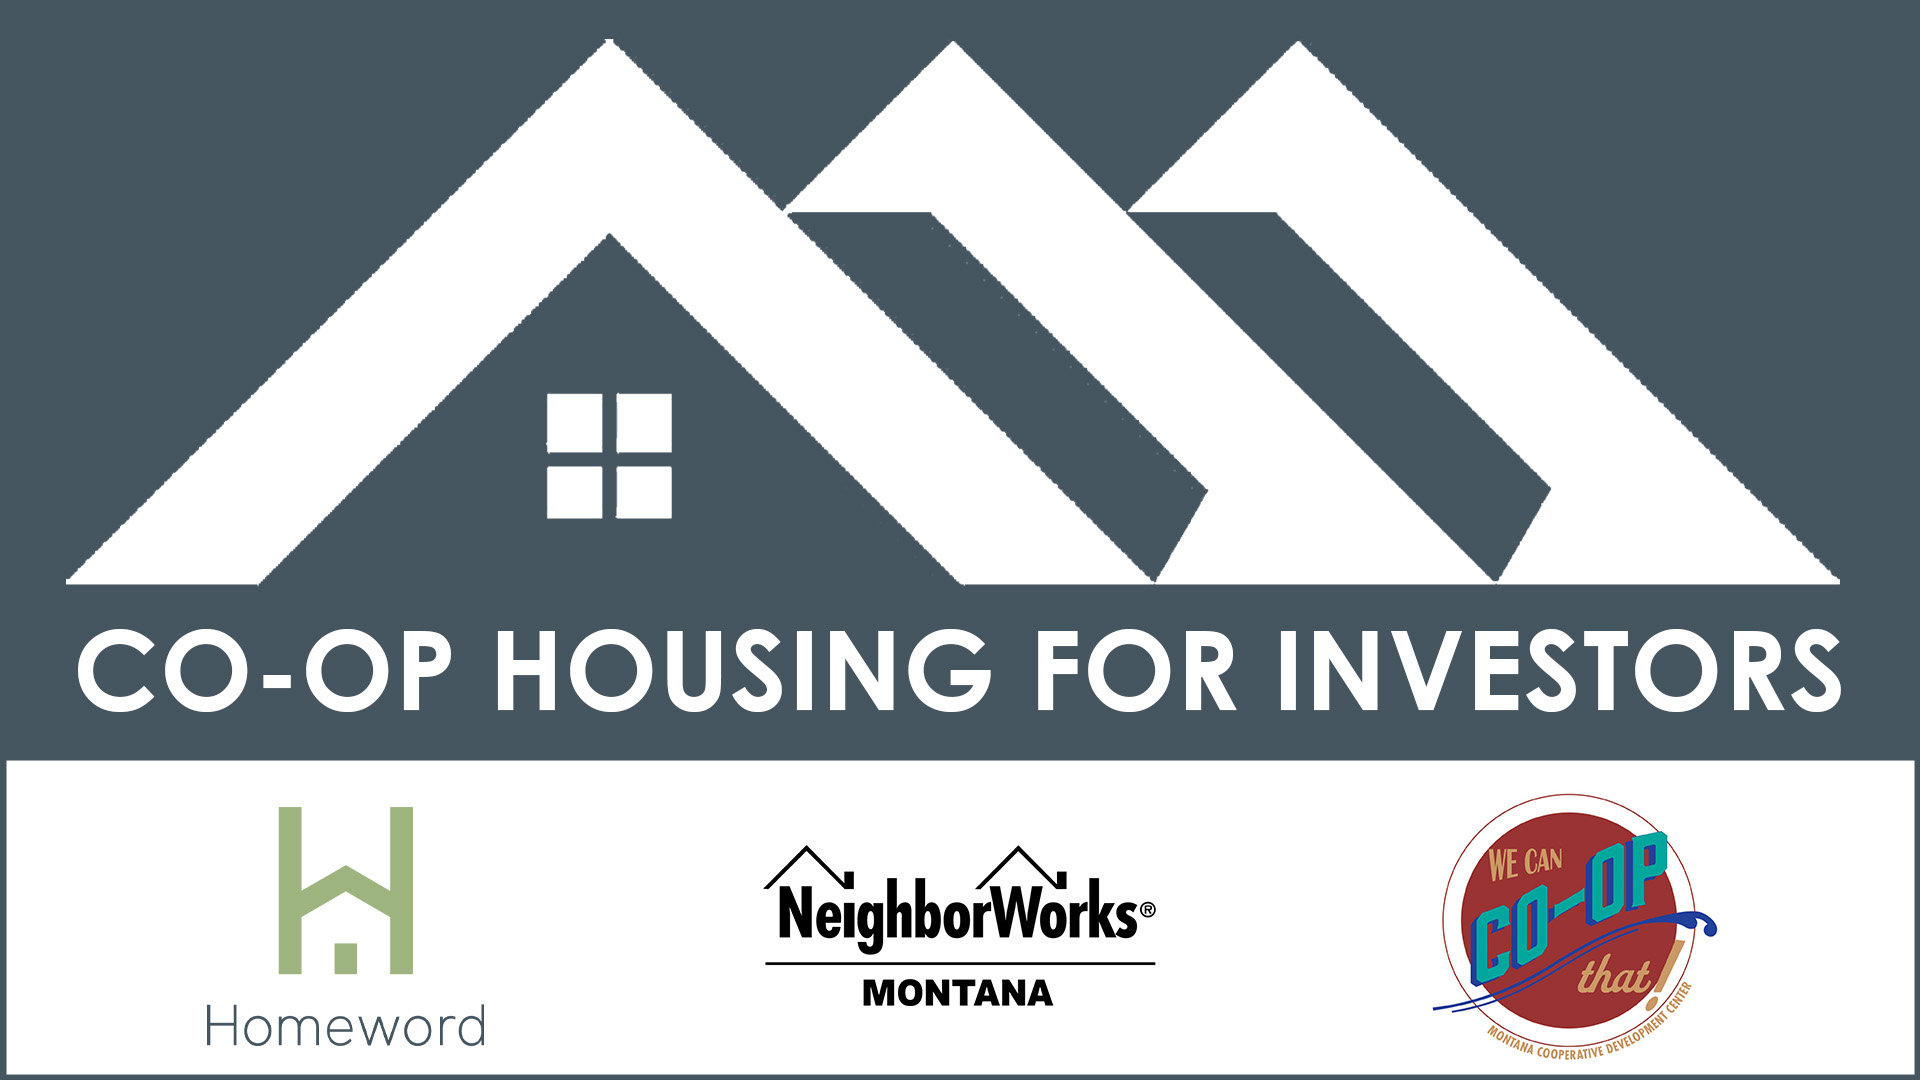 Co-Op Housing for Investors, sponsored by Homeword, NeighborWorks Montana and the Montana Cooperative Development Center